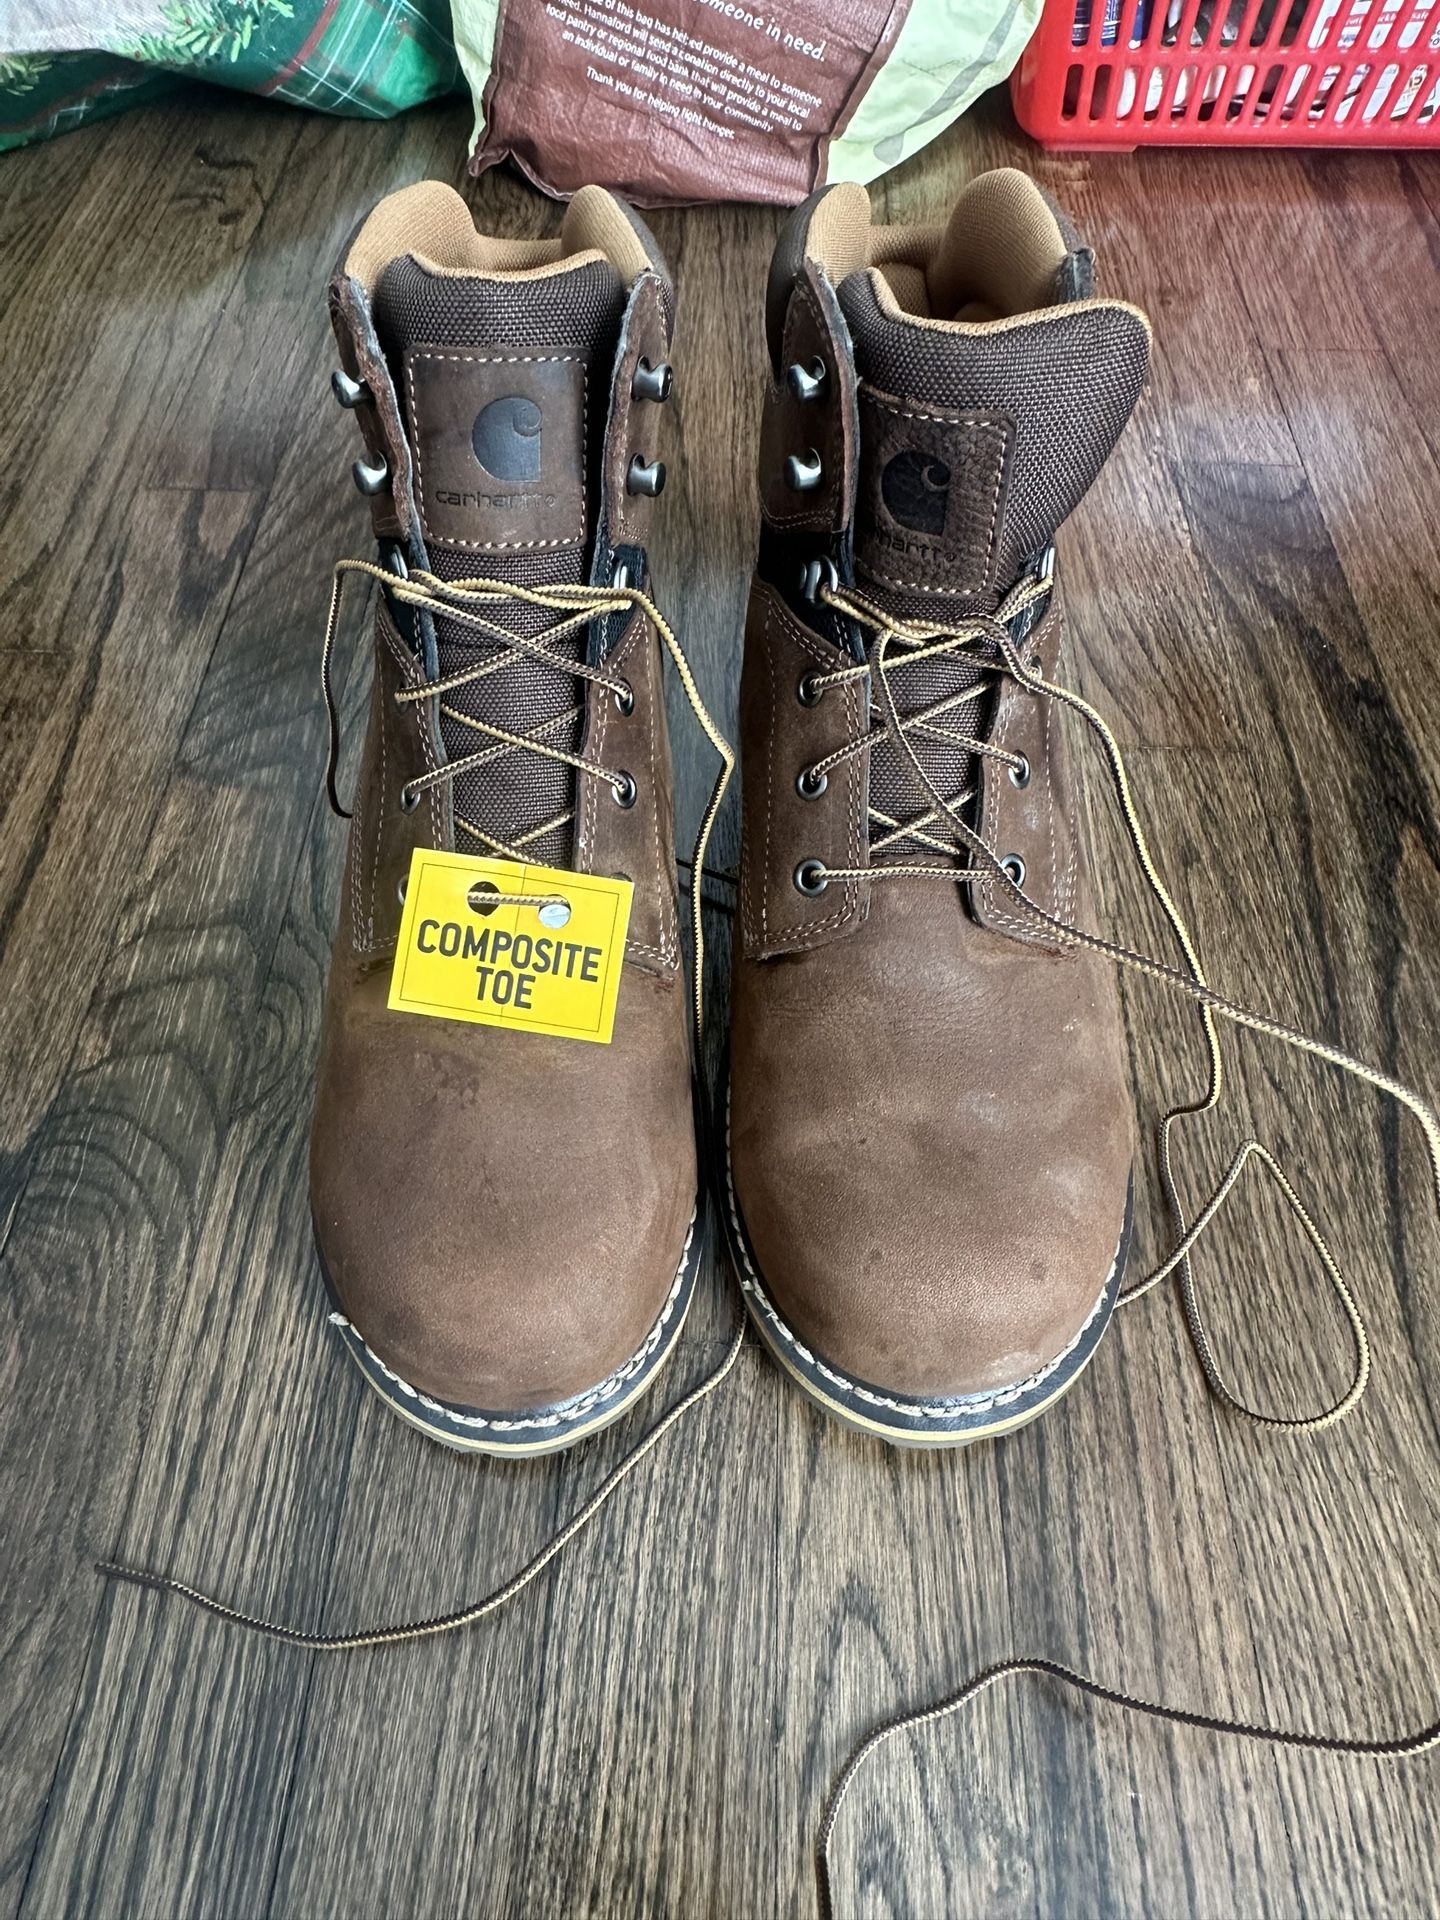 Carhartt Work Boots Size 10 New